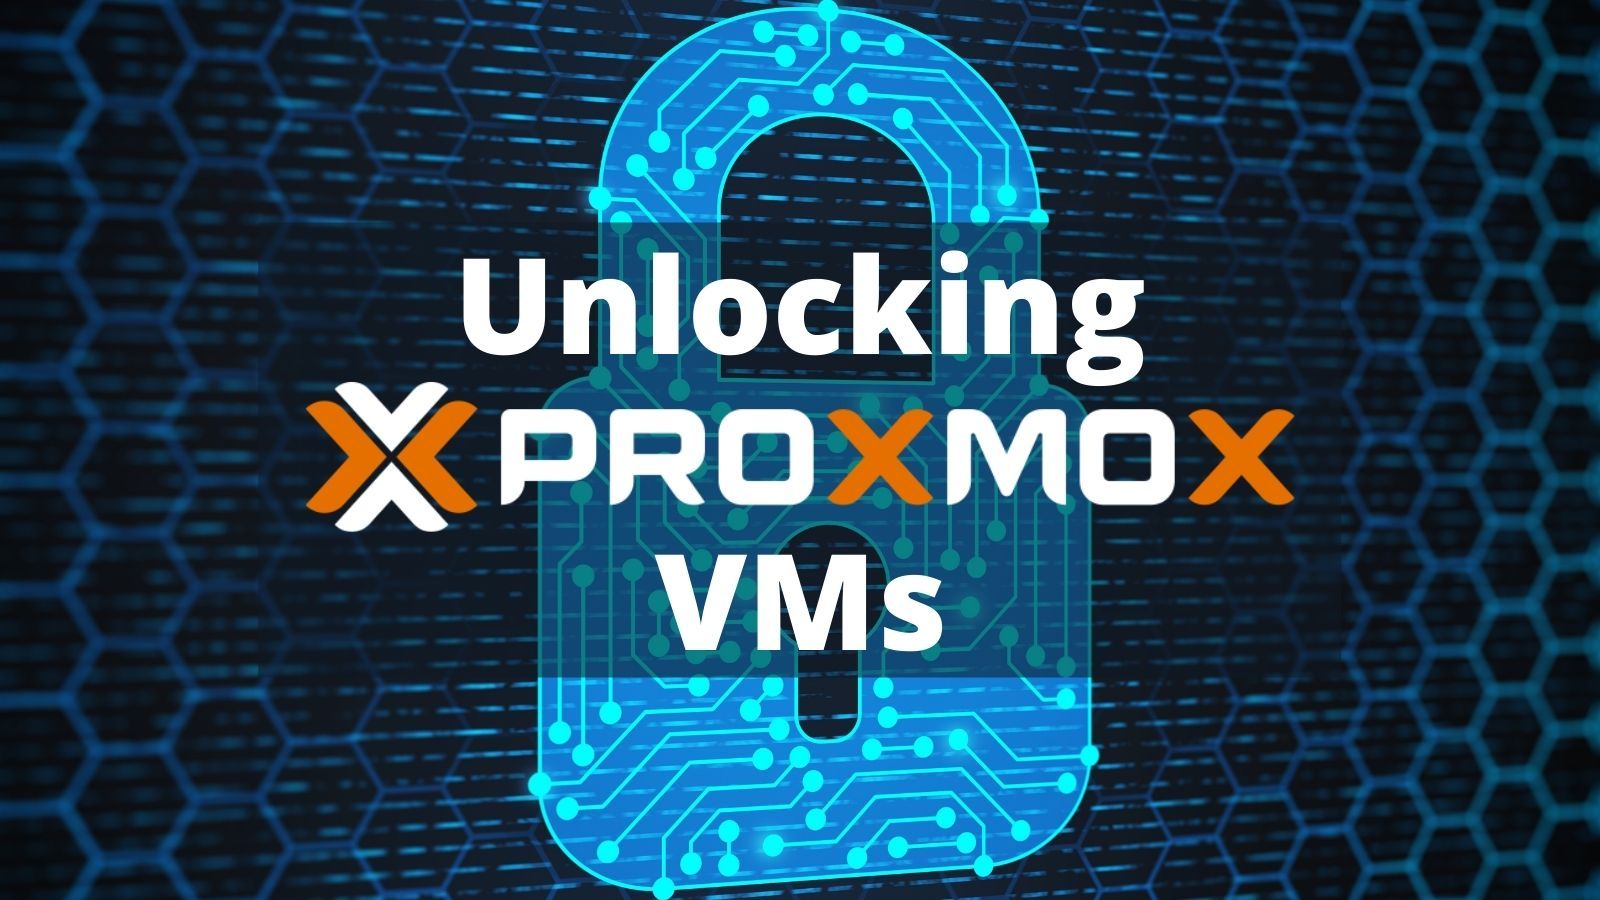 How to Unlock a Proxmox VM